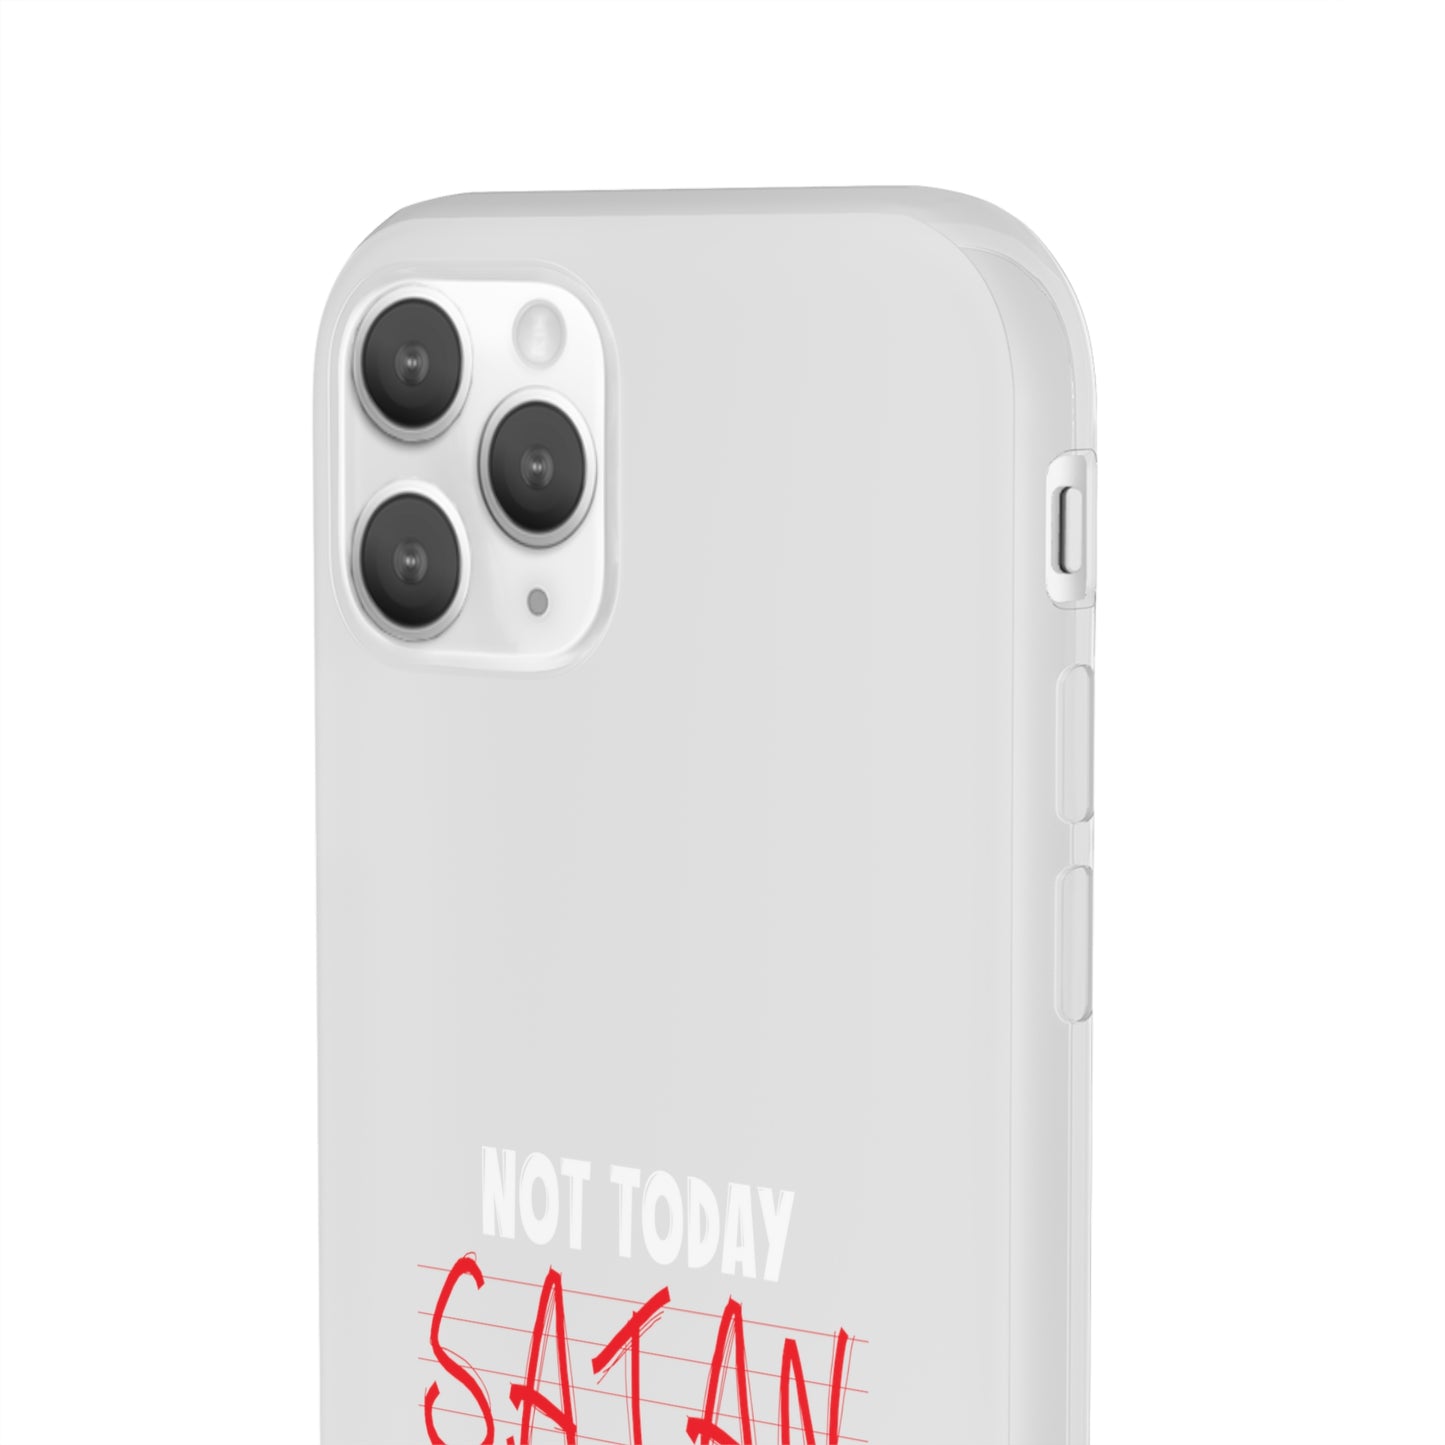 Not Today Satan Not Tomorrow Either Christian Flexi Phone Case Printify